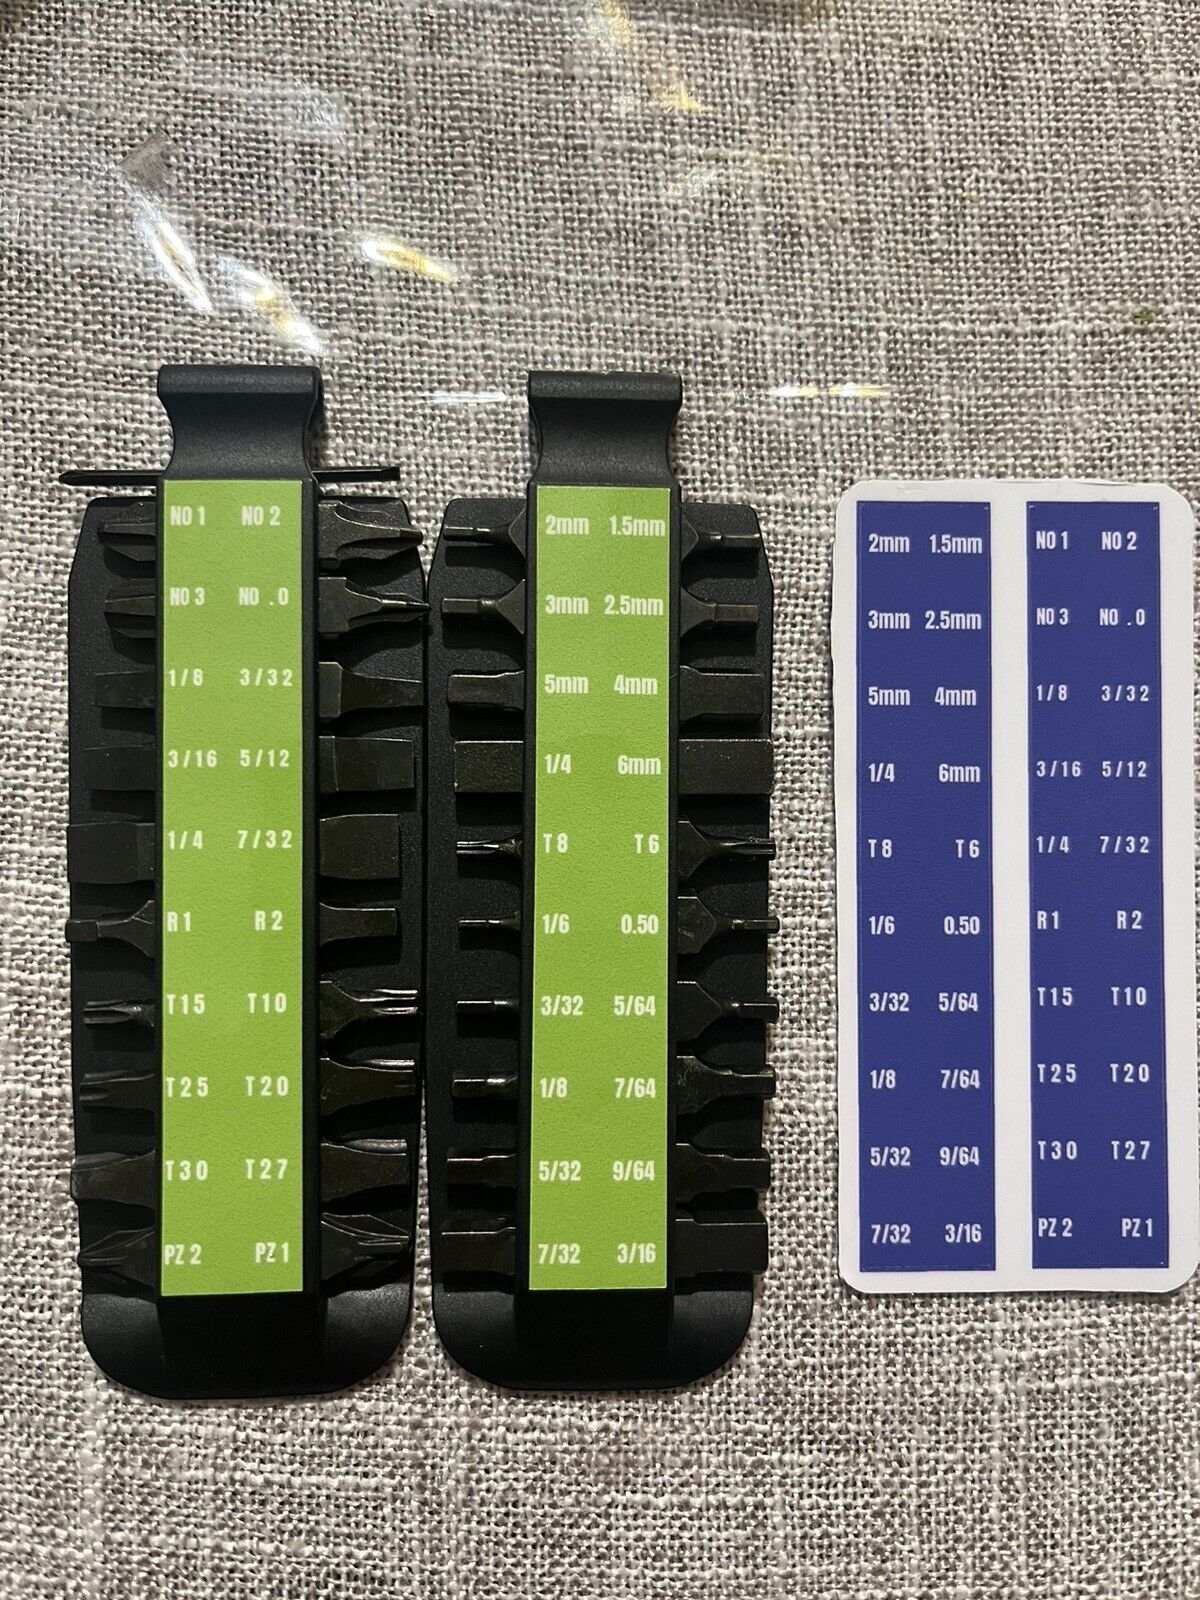 New Leatherman Parts  Mod Replacement Bit  Kit  Stickers(blue)